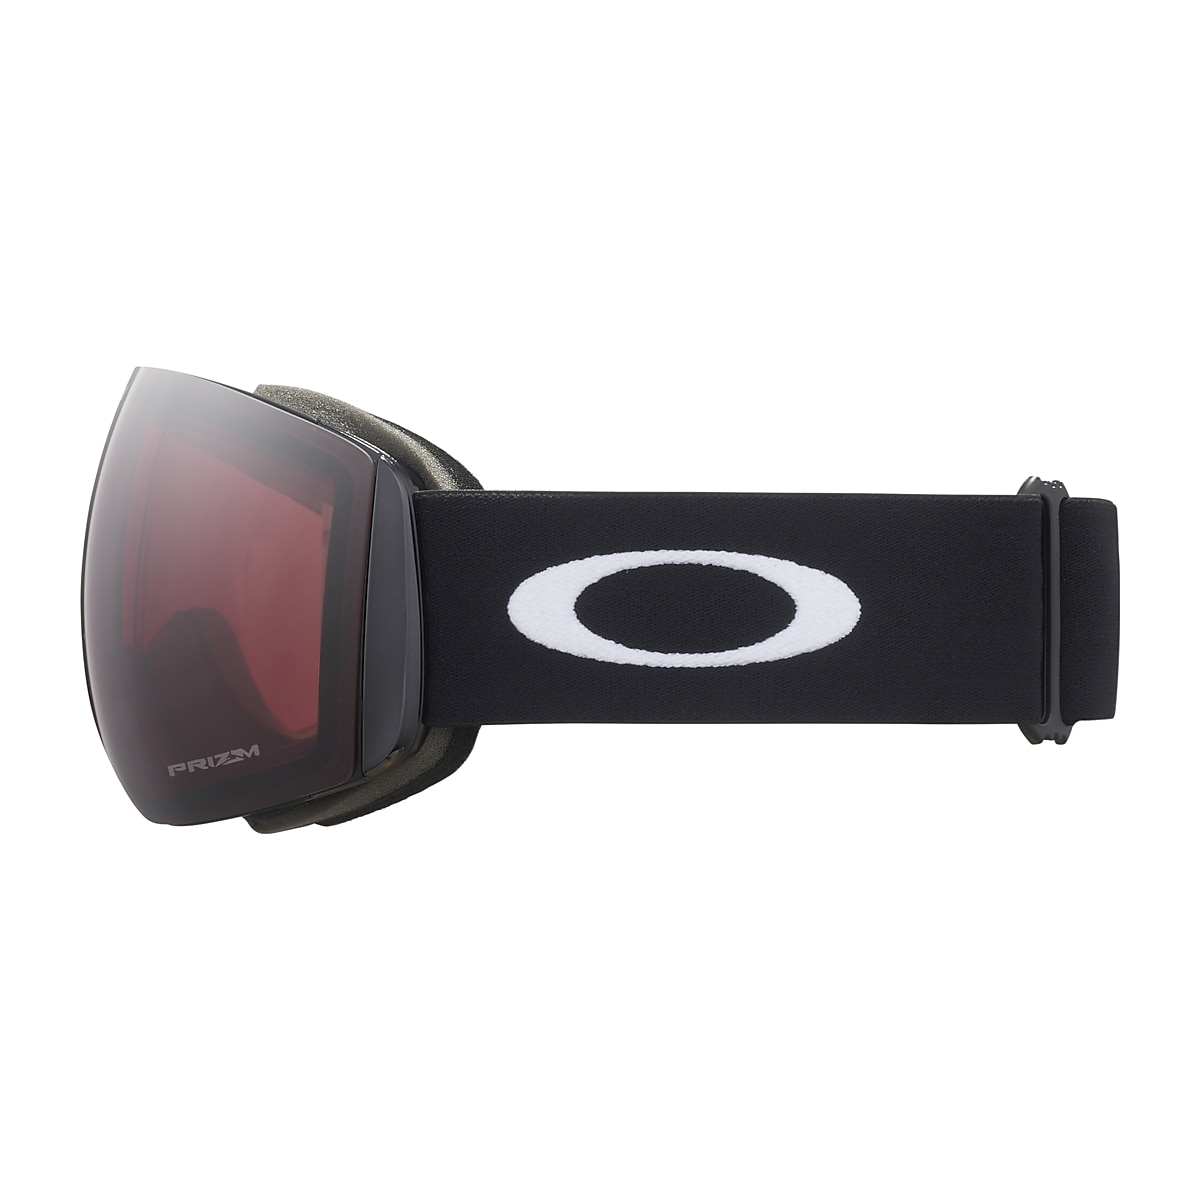 Oakley Flight Deck™ L Snow Goggles - Matte Black - Prizm Snow Torch Iridium  - OO7050-33